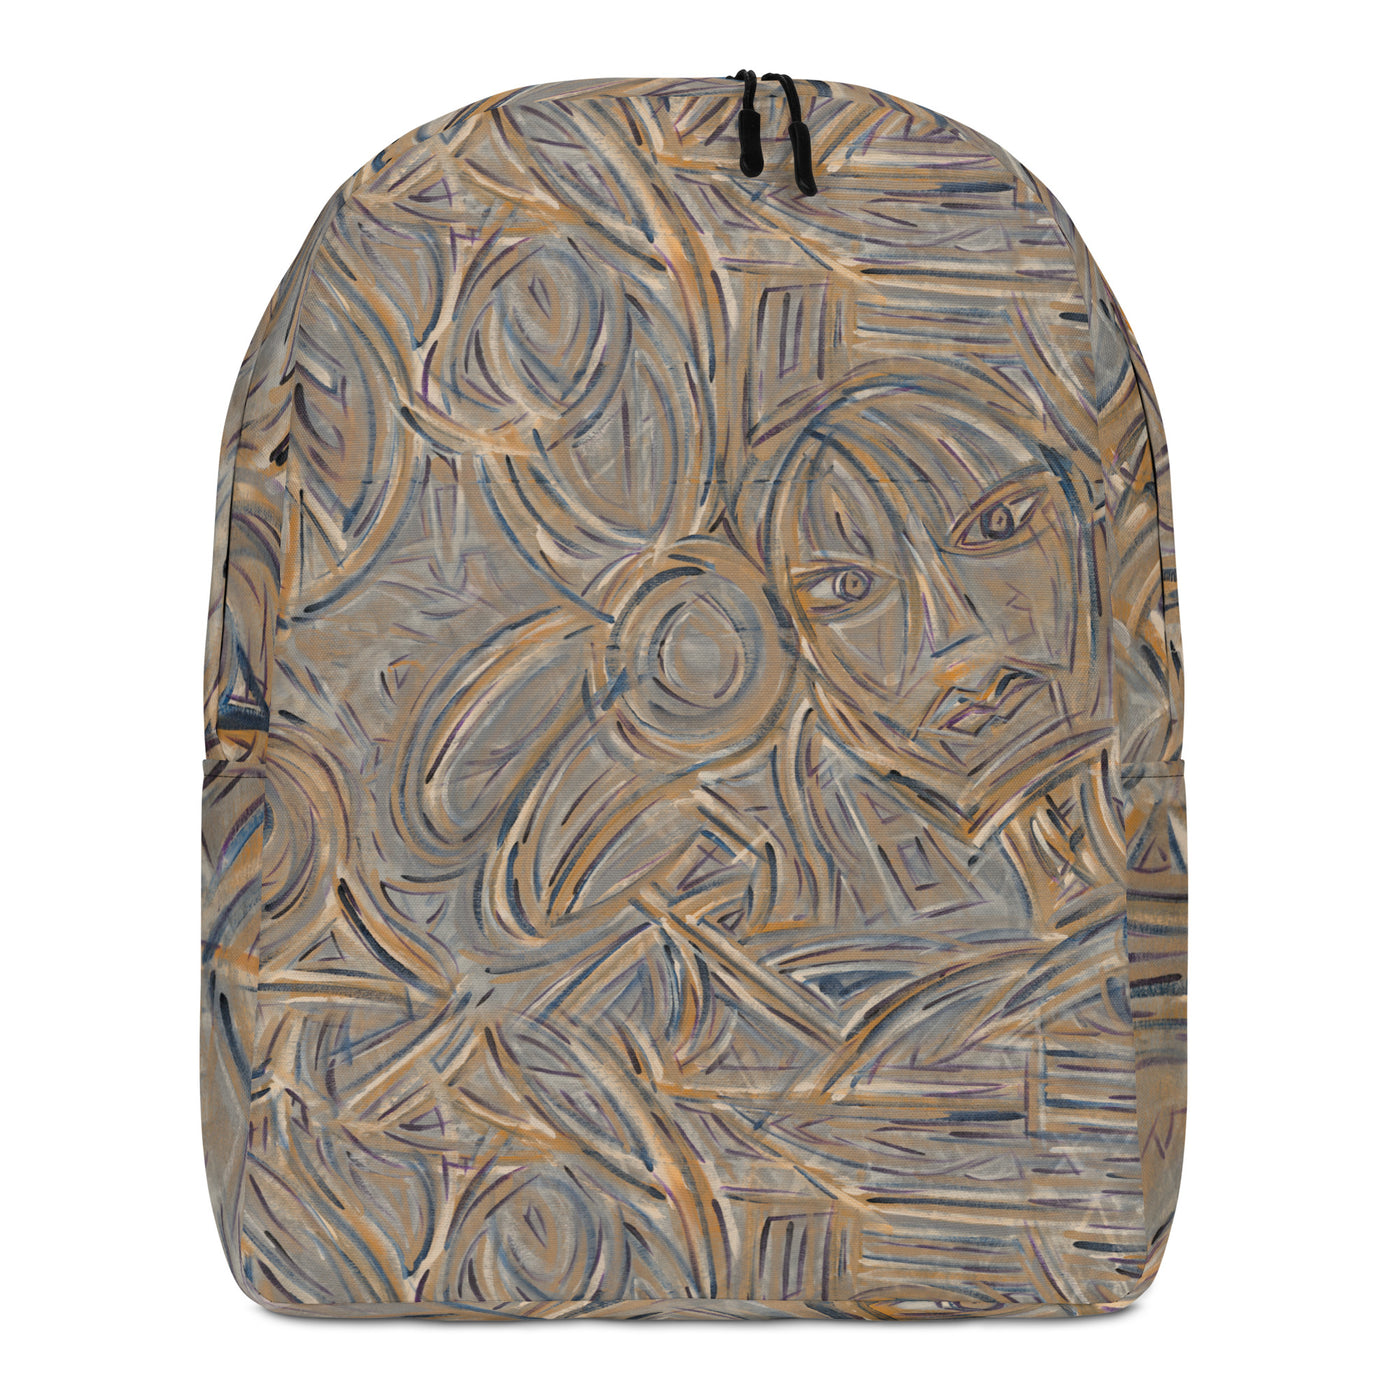 Goddess Art Minimalist Backpack